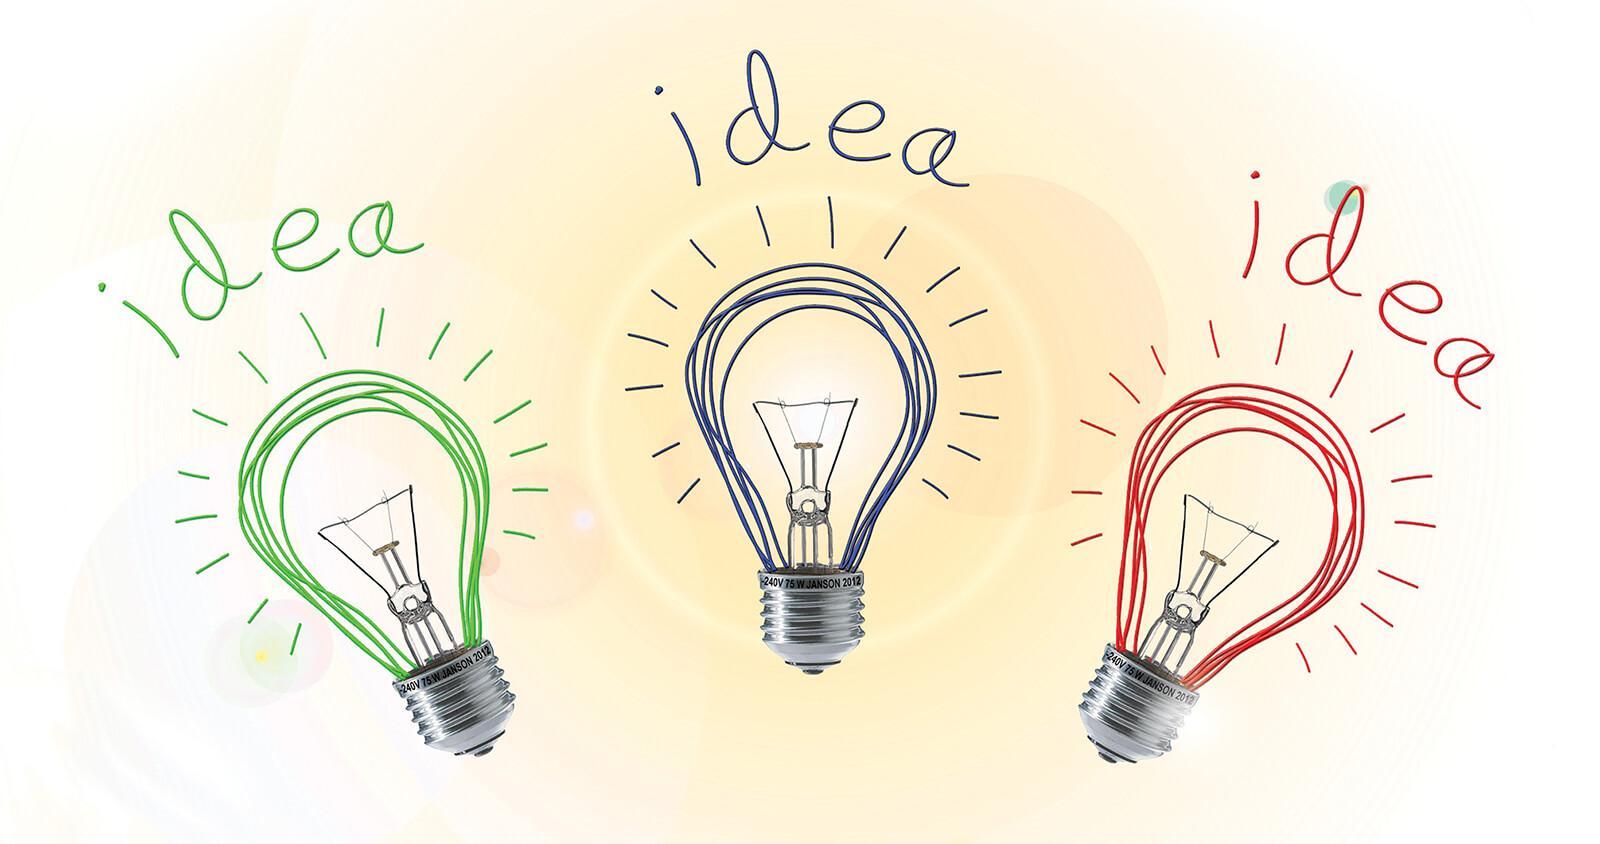 Three ideas to make work better